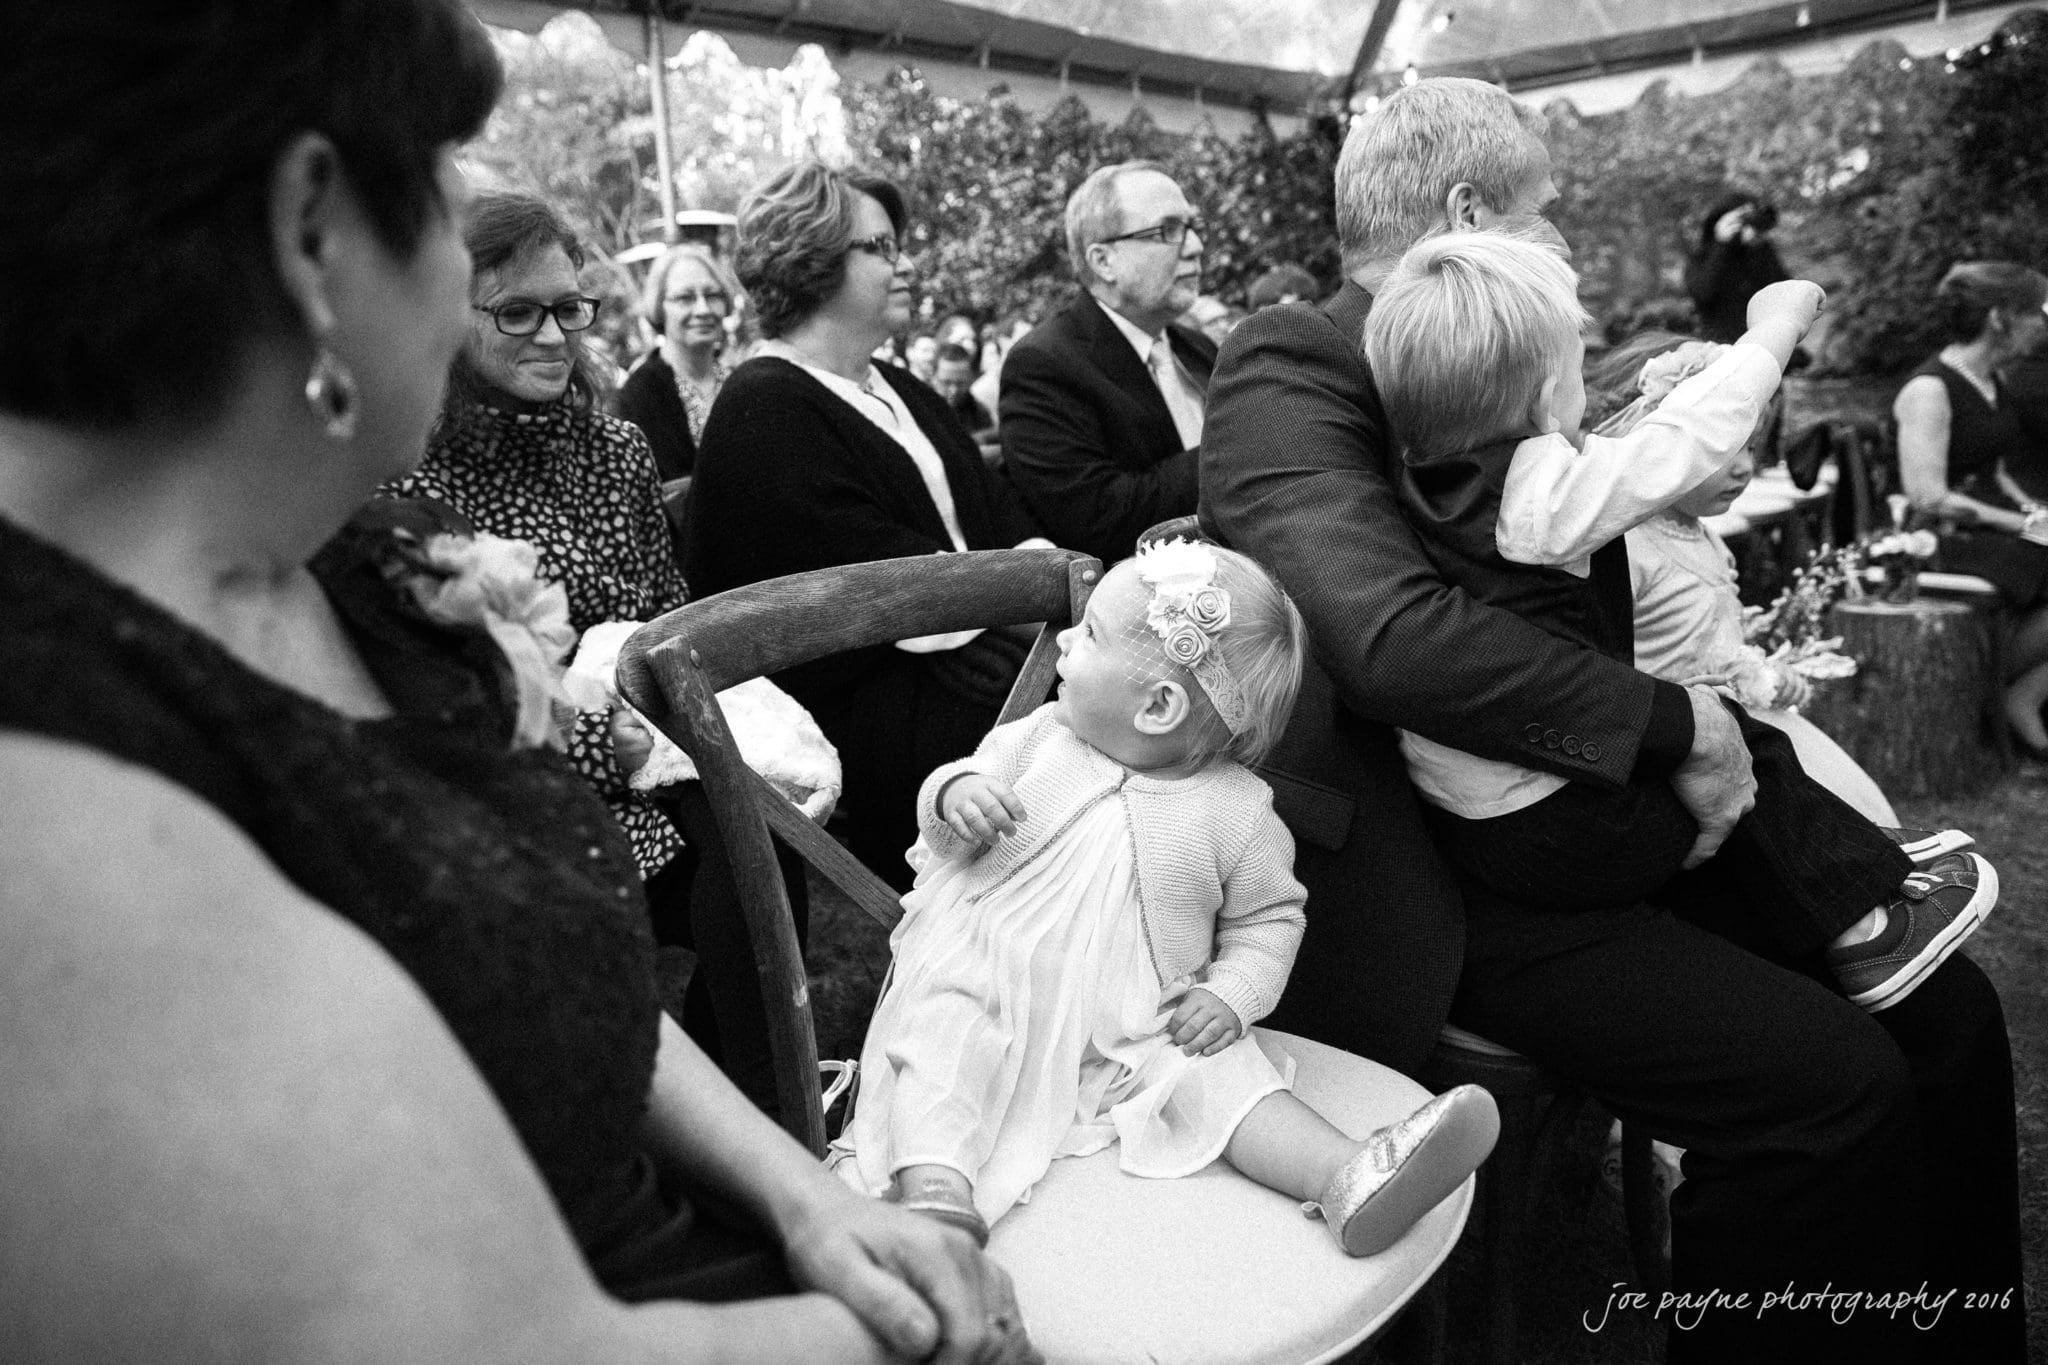 raleigh wedding photography - kate & john's backyard wedding